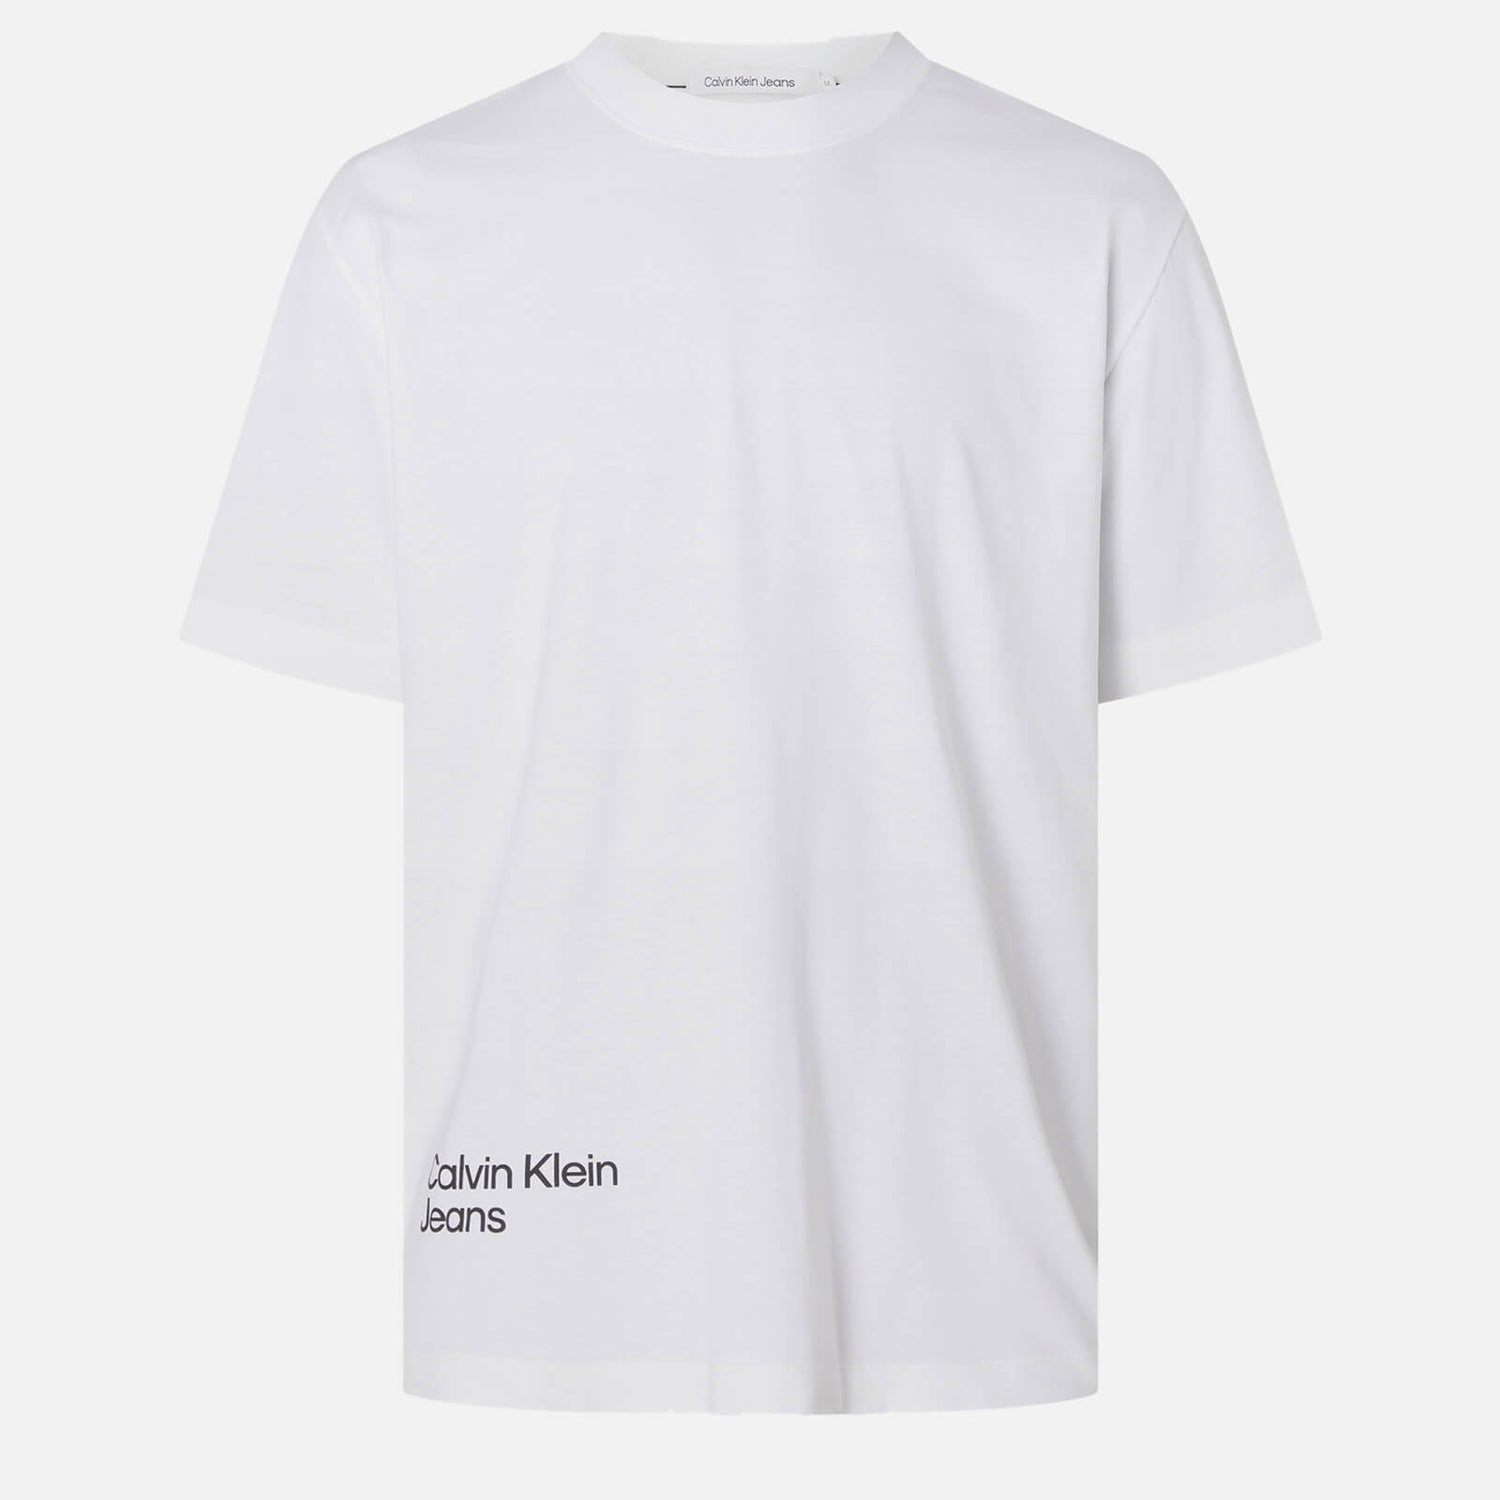 Calvin Klein Jeans Blurred Graphic Cotton T-Shirt